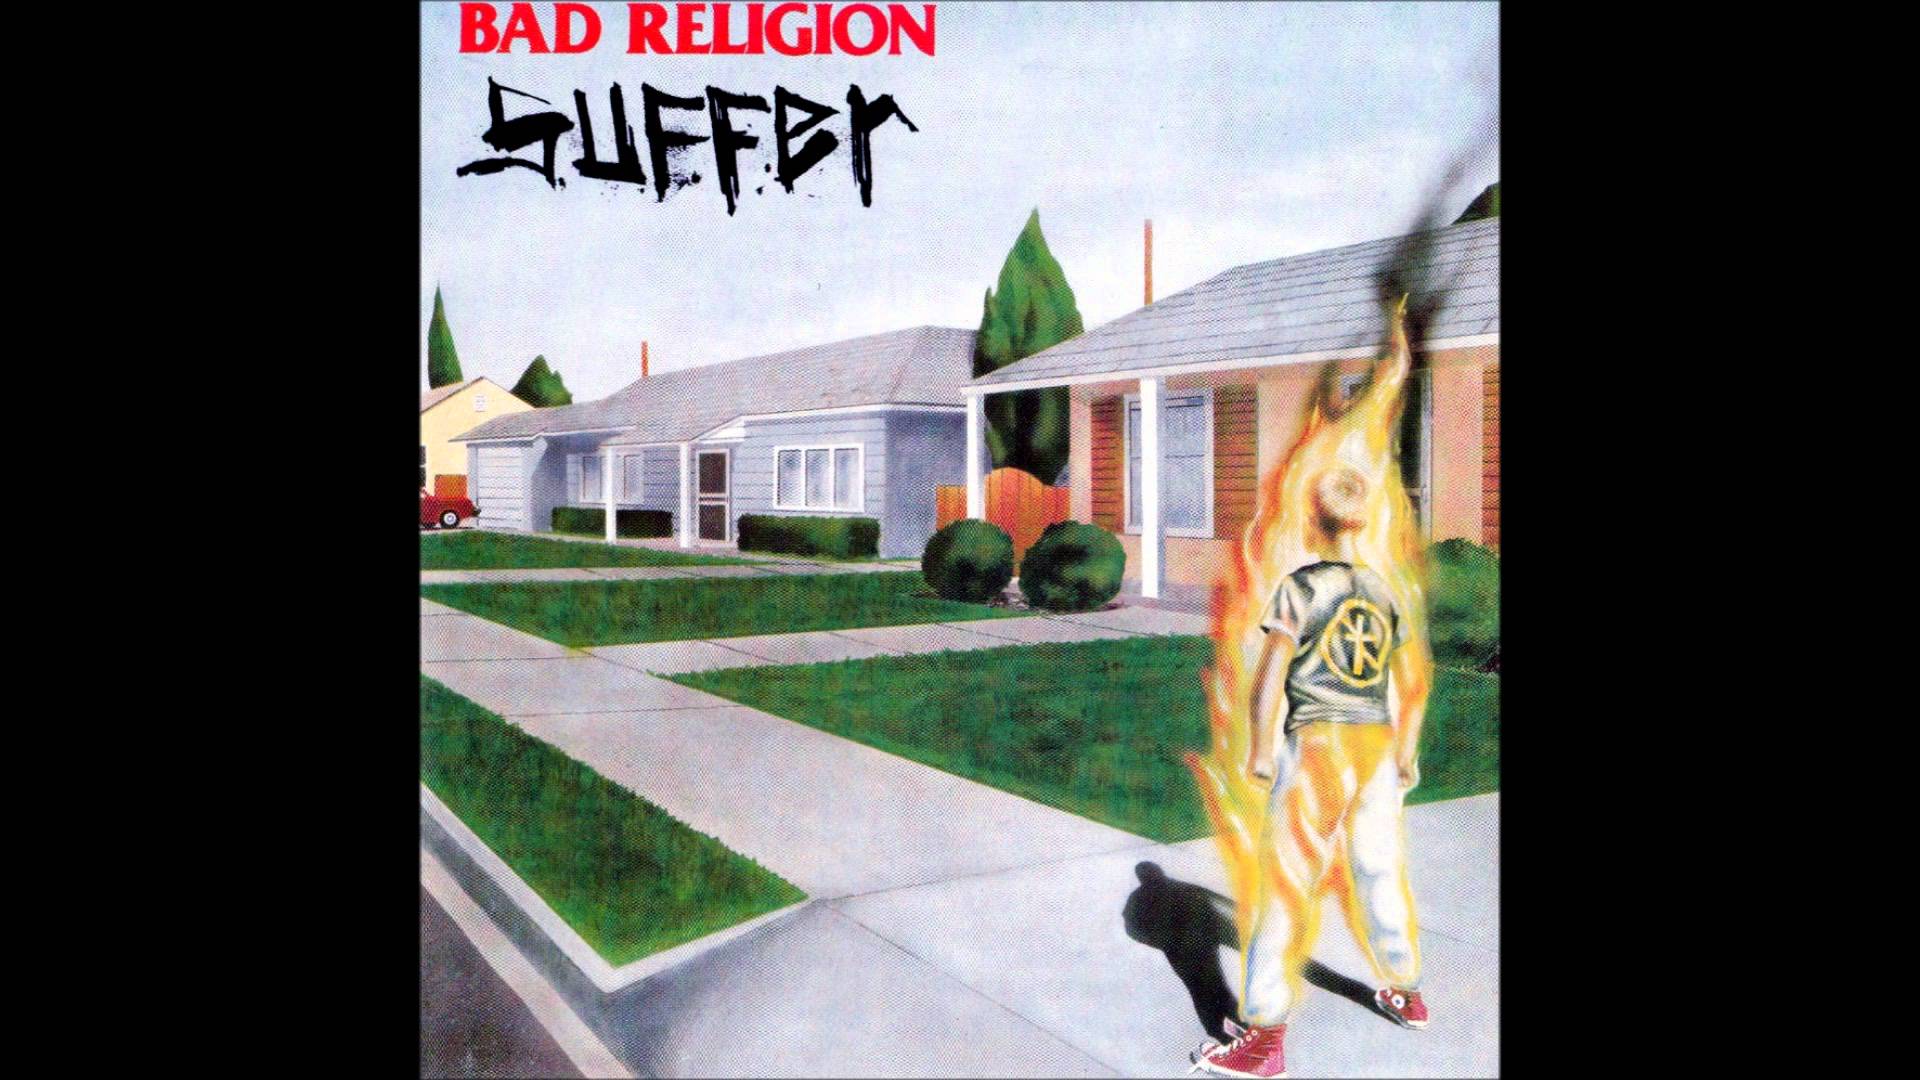 Bad Religion - Suffer (Full Album) - YouTube